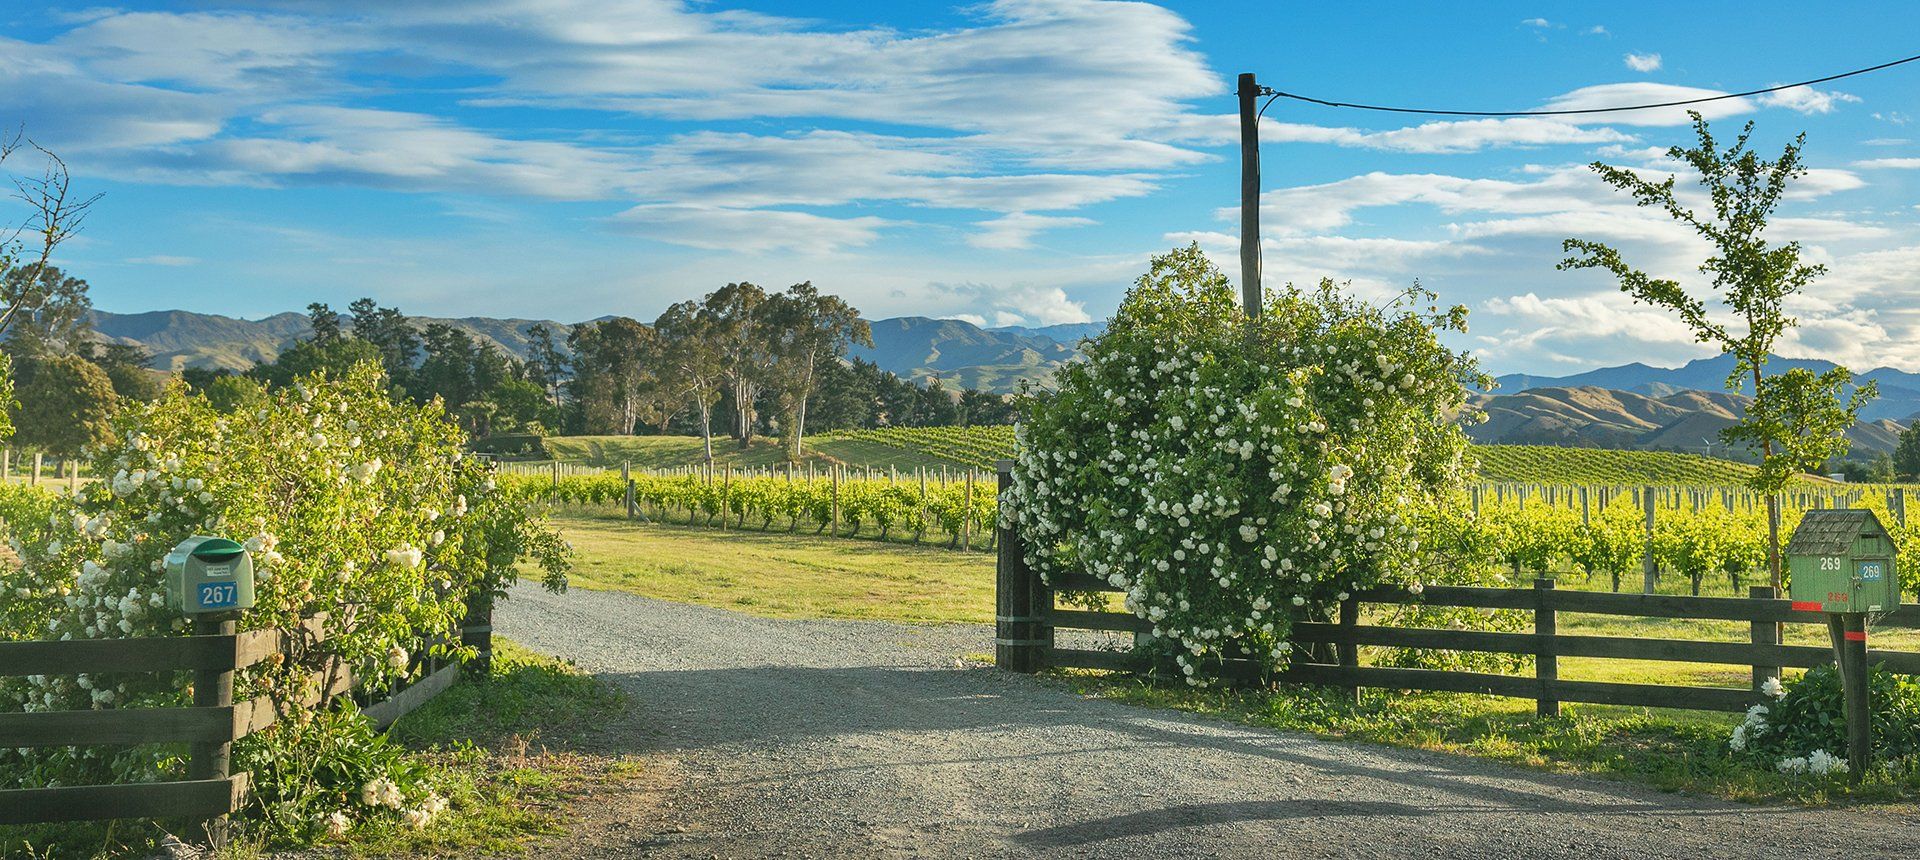 Montgomery's Vineyard Homestay Accommodation in Blenheim, Marlborough, New Zealand